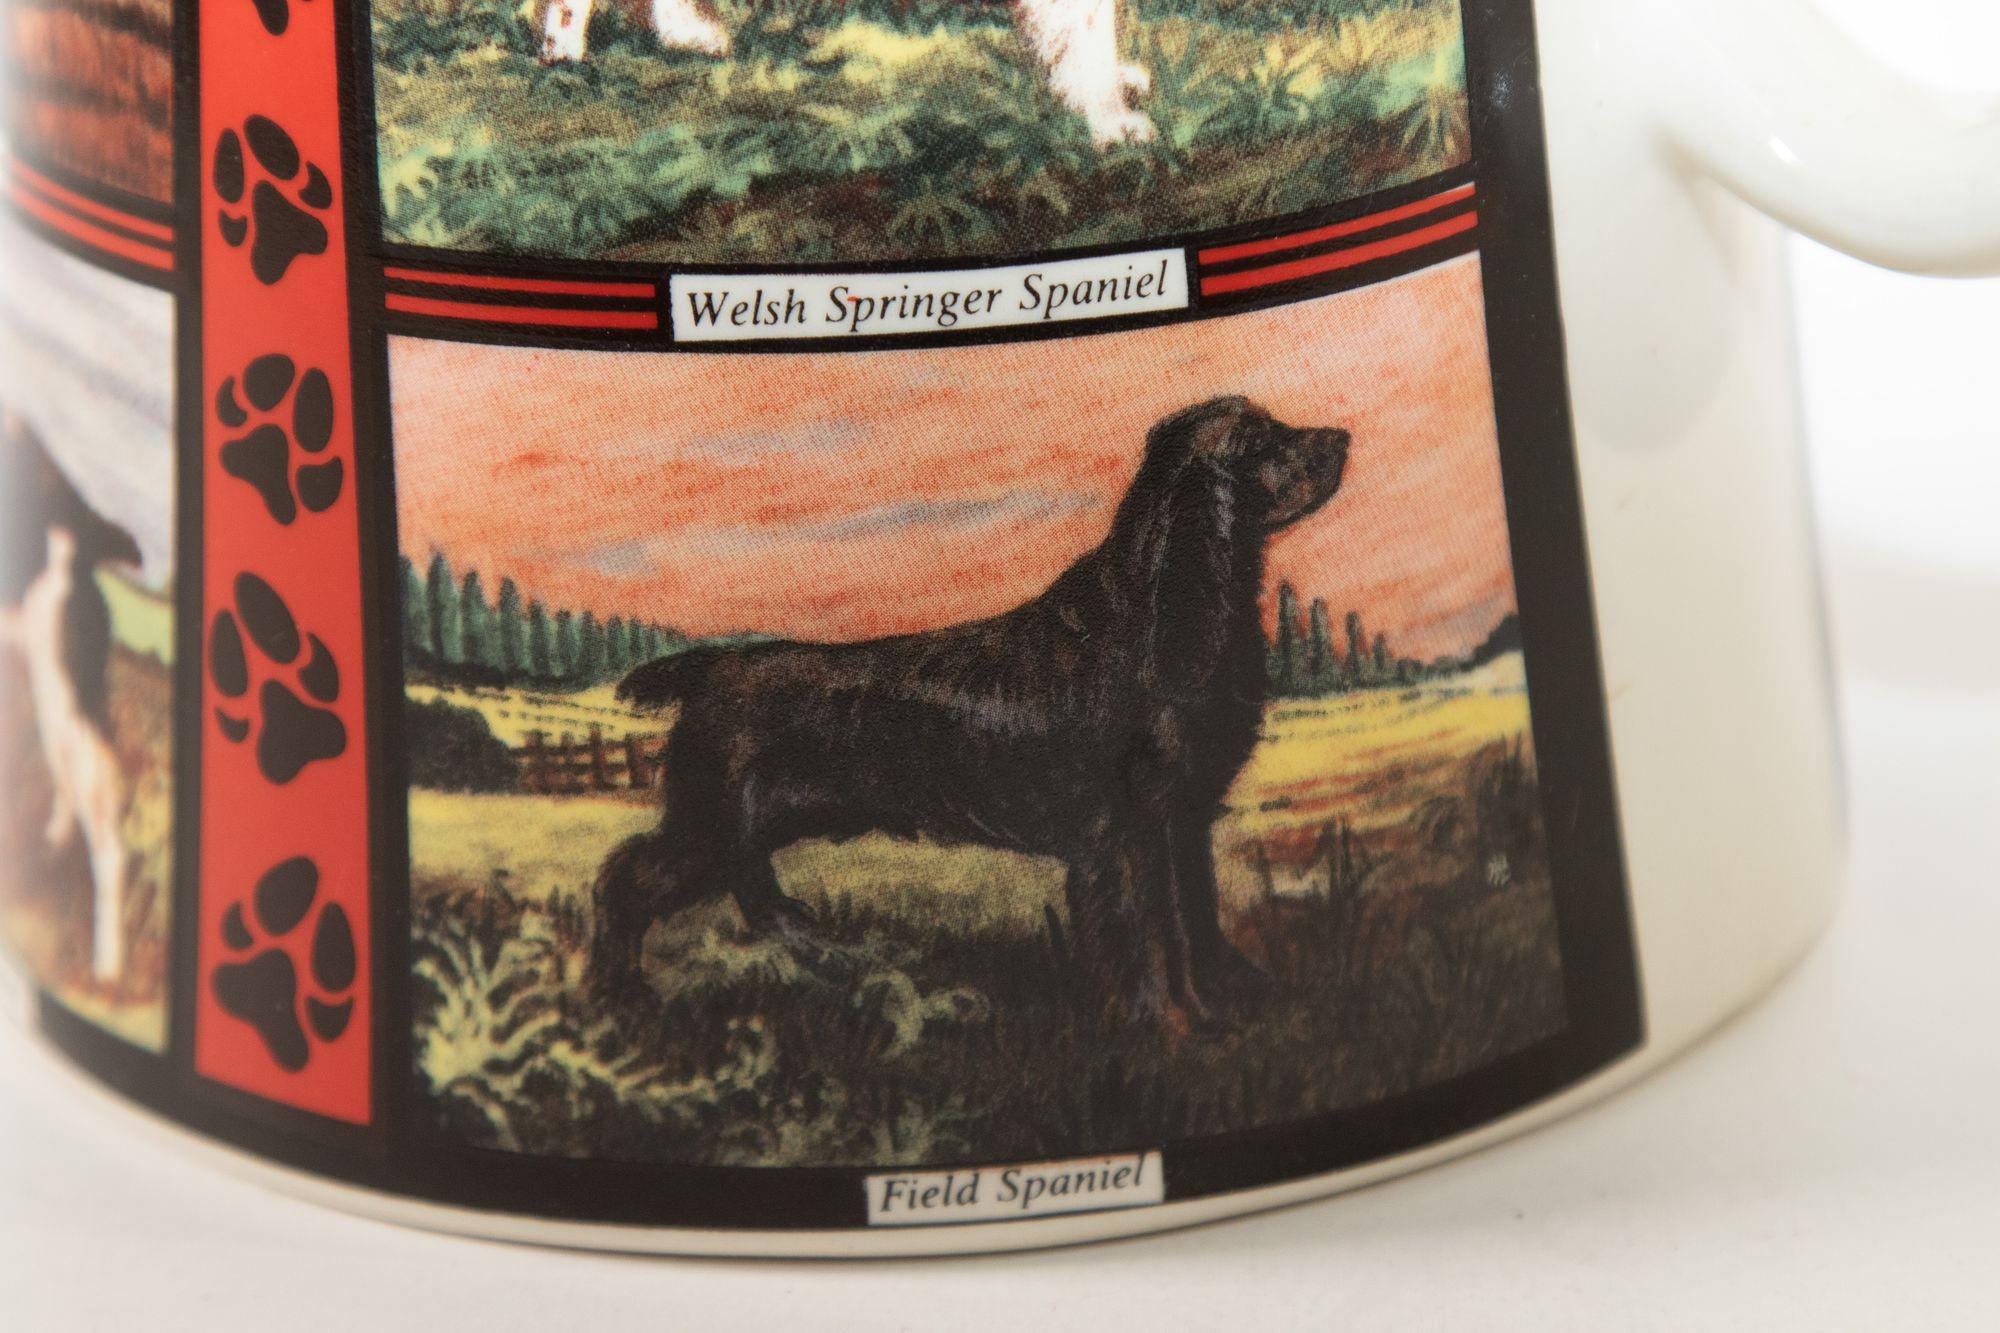 Vintage 1970s Ceramic Pitcher, Derbyshire England with Dog Breeds Pictures For Sale 13